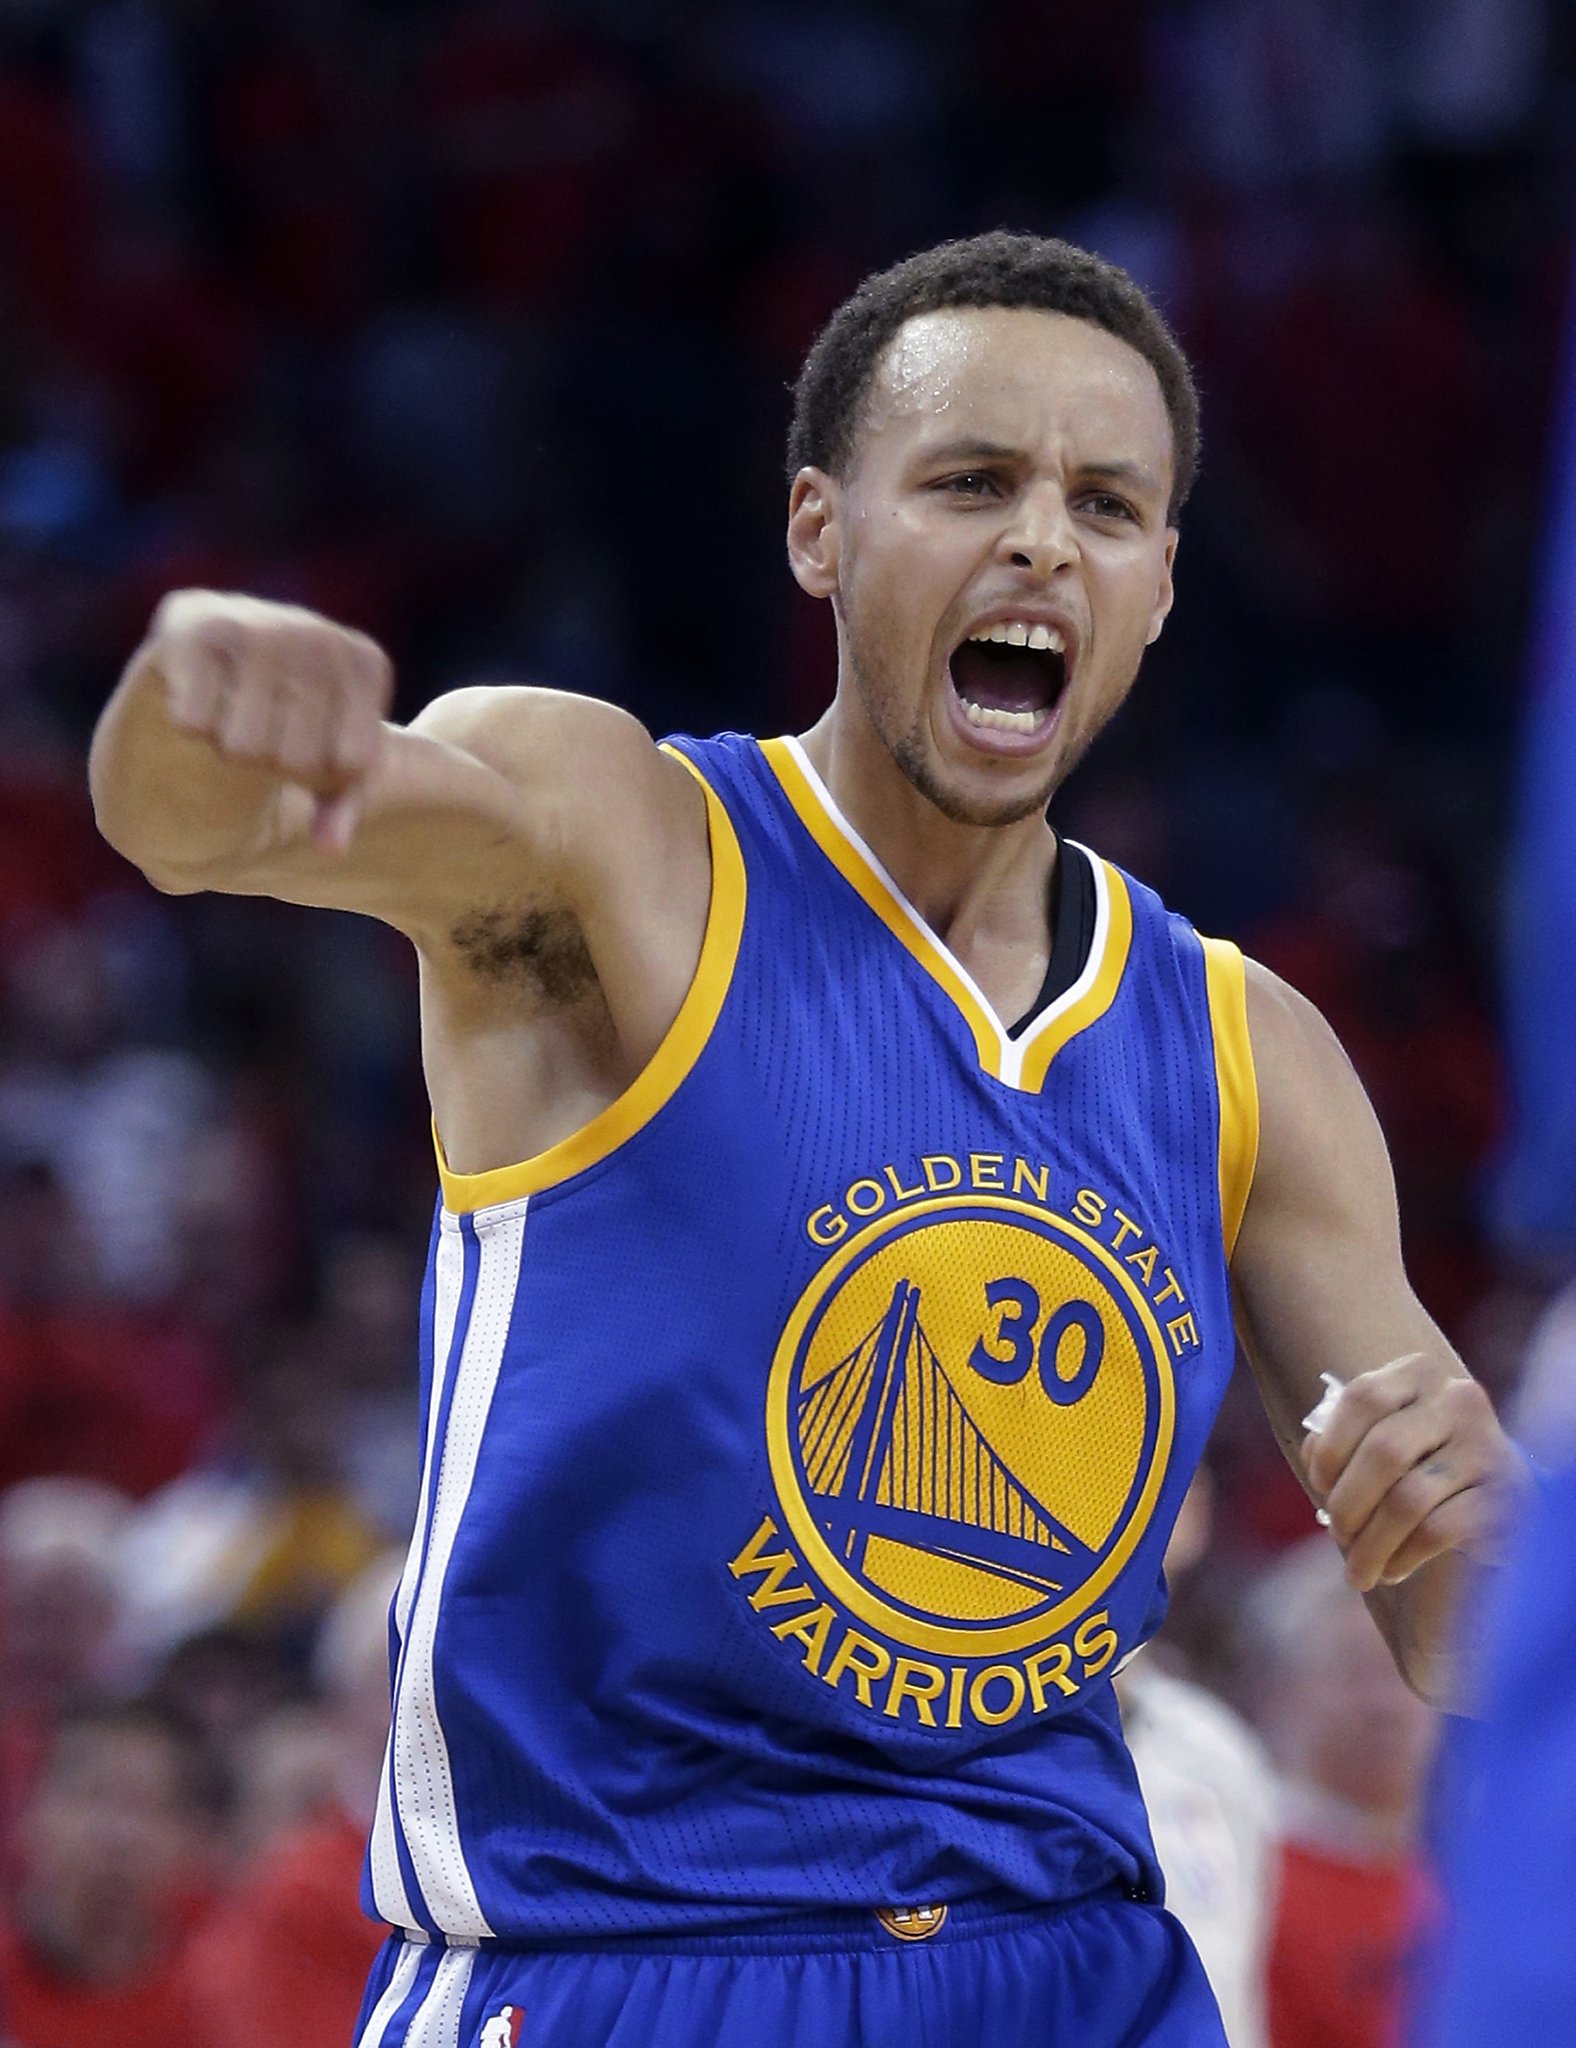 NBA: Stephen Curry scores 42 as Warriors win big over Pelicans